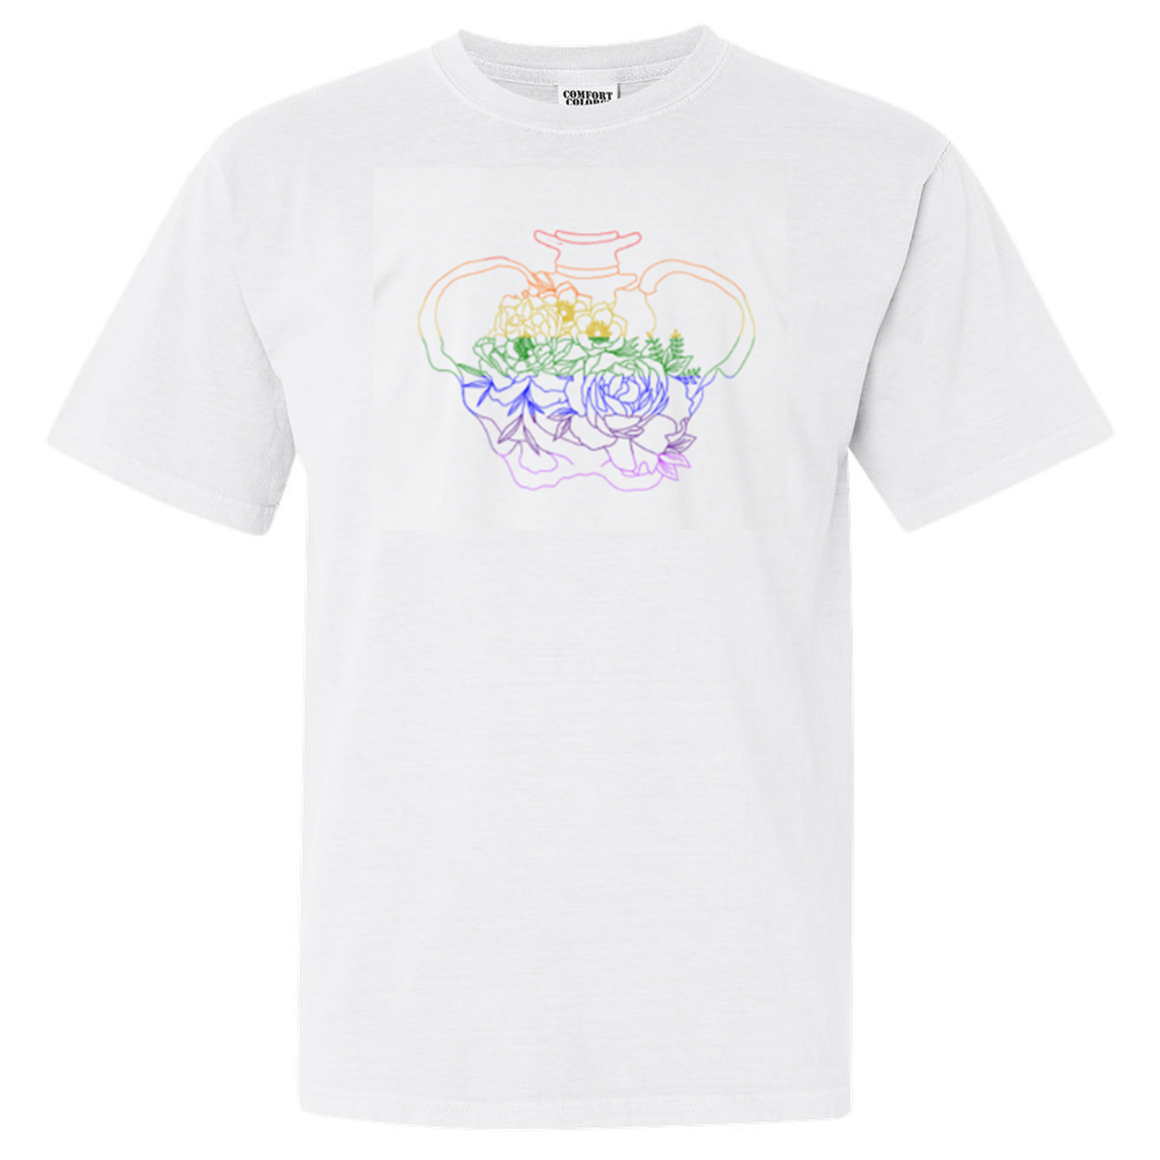 Unisex Pelvic Pride Short Sleeve Rainbow Shirt